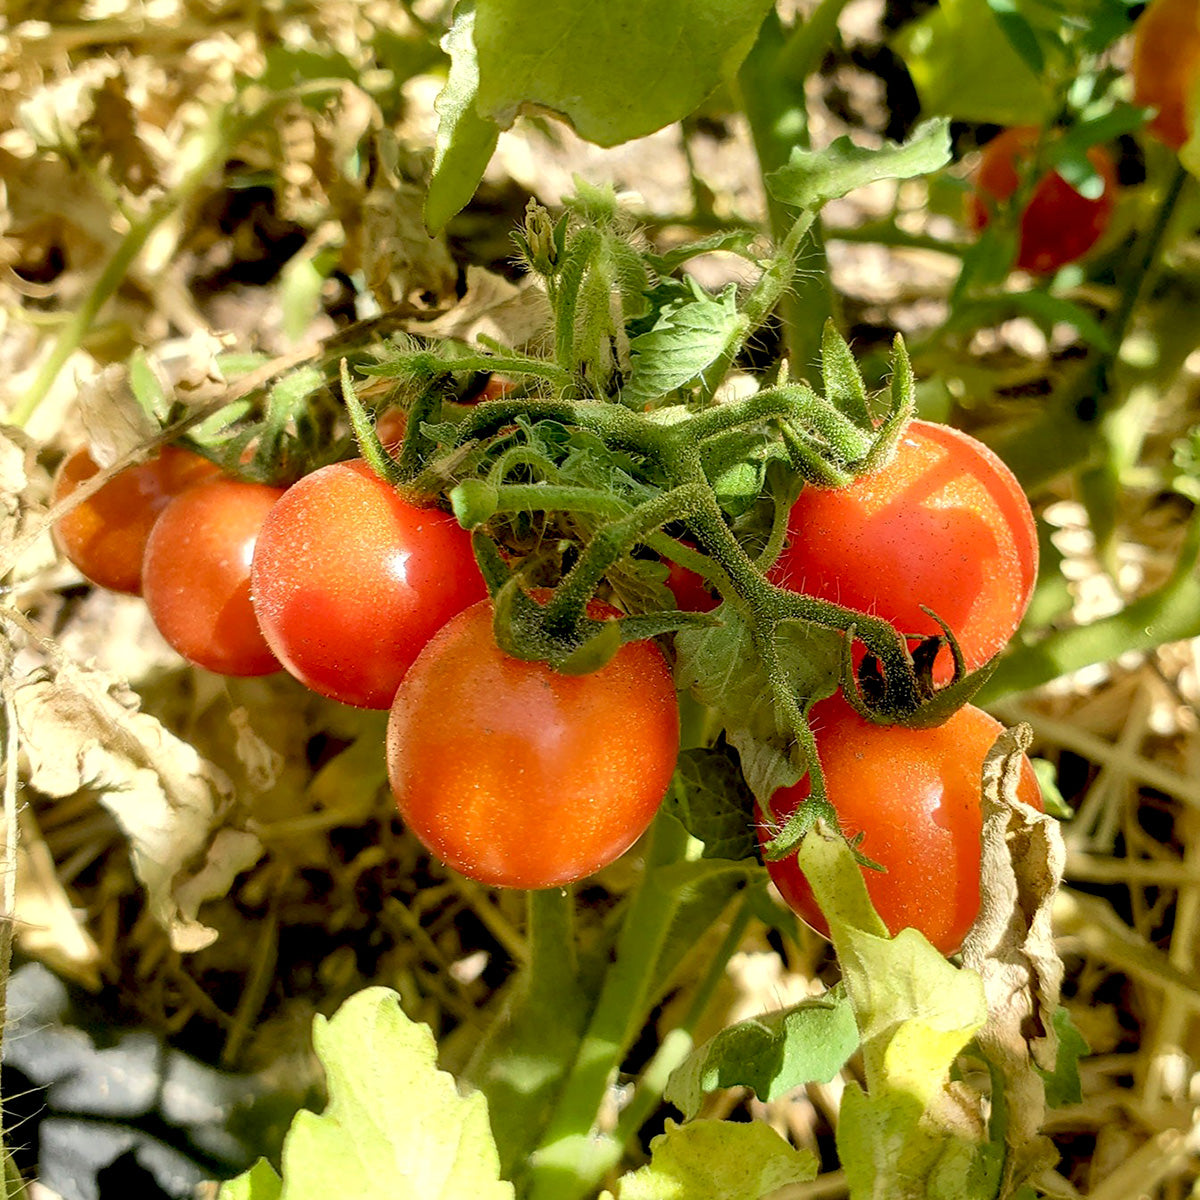 Texas wild cherry tomatoes